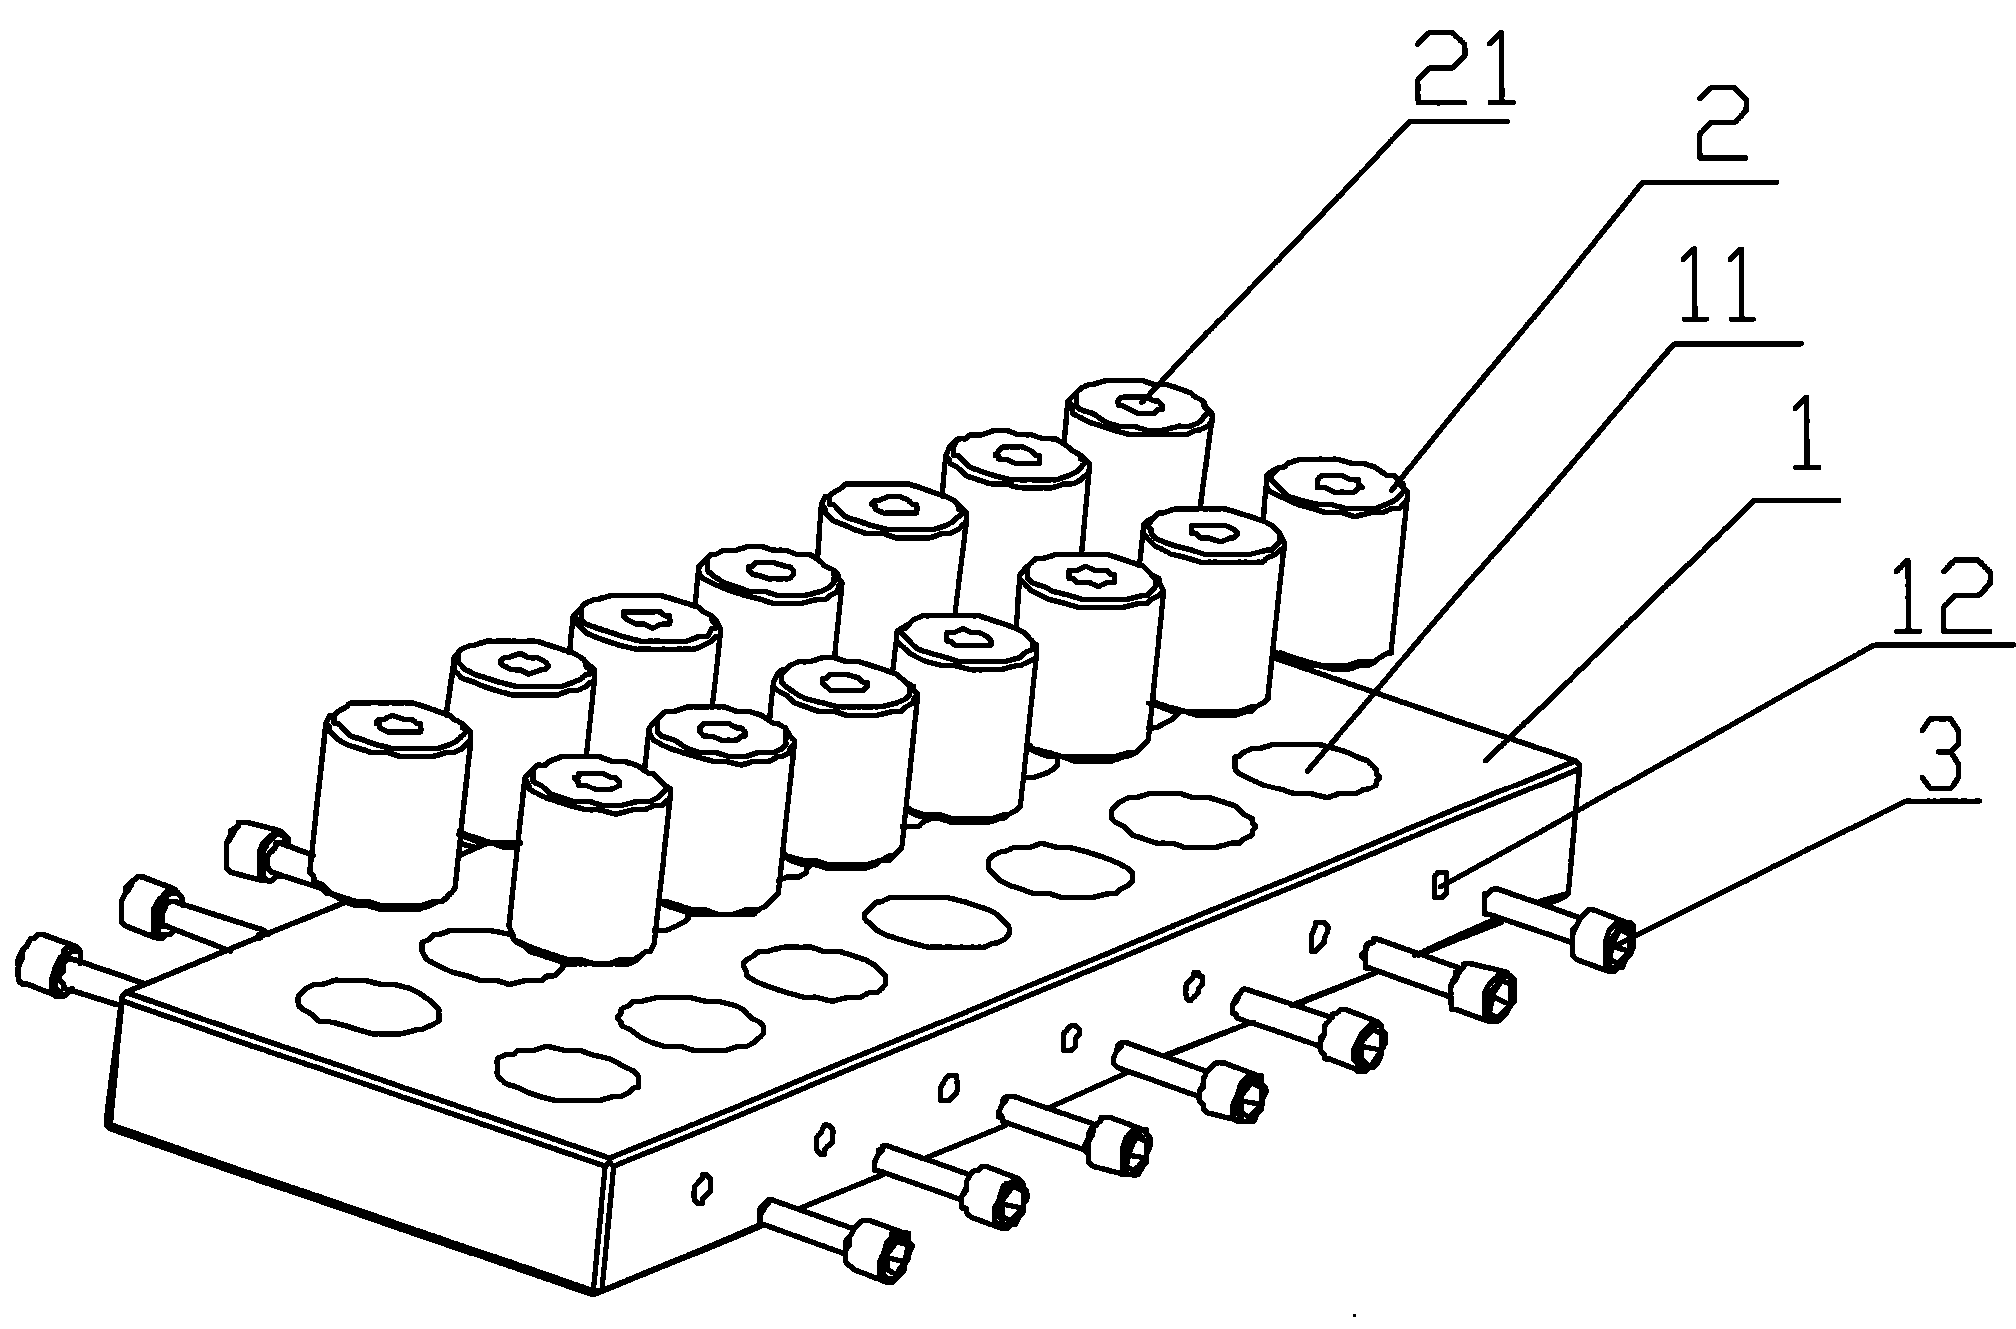 Positioning hole jig used in slow-silk thread cutting machine